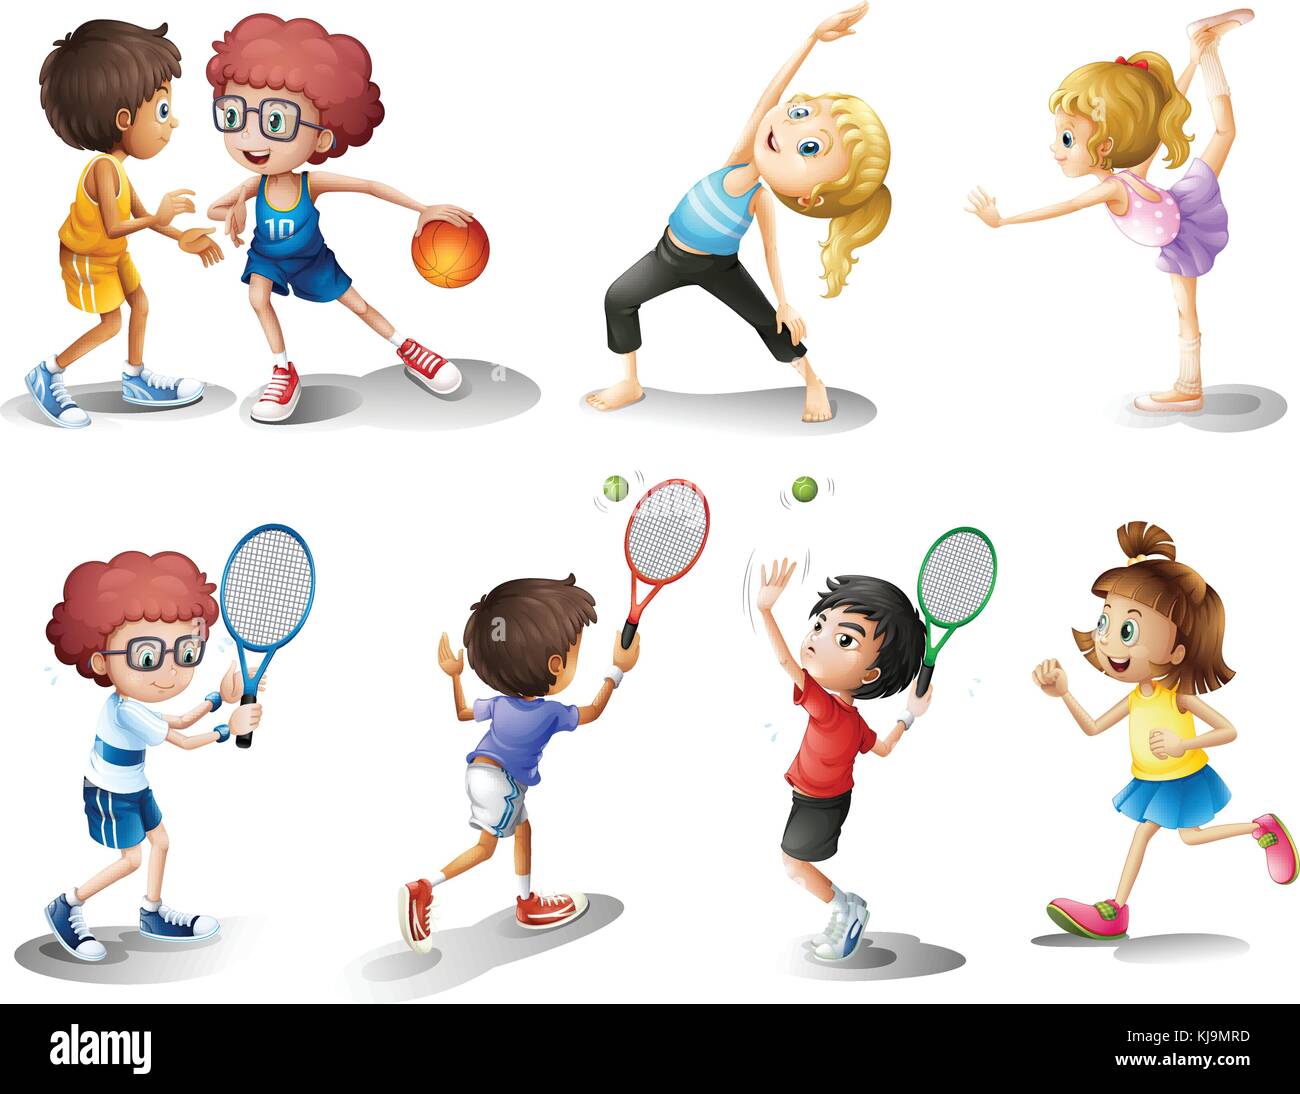 https://c8.alamy.com/comp/KJ9MRD/illustration-of-kids-exercising-and-playing-different-sports-on-a-KJ9MRD.jpg